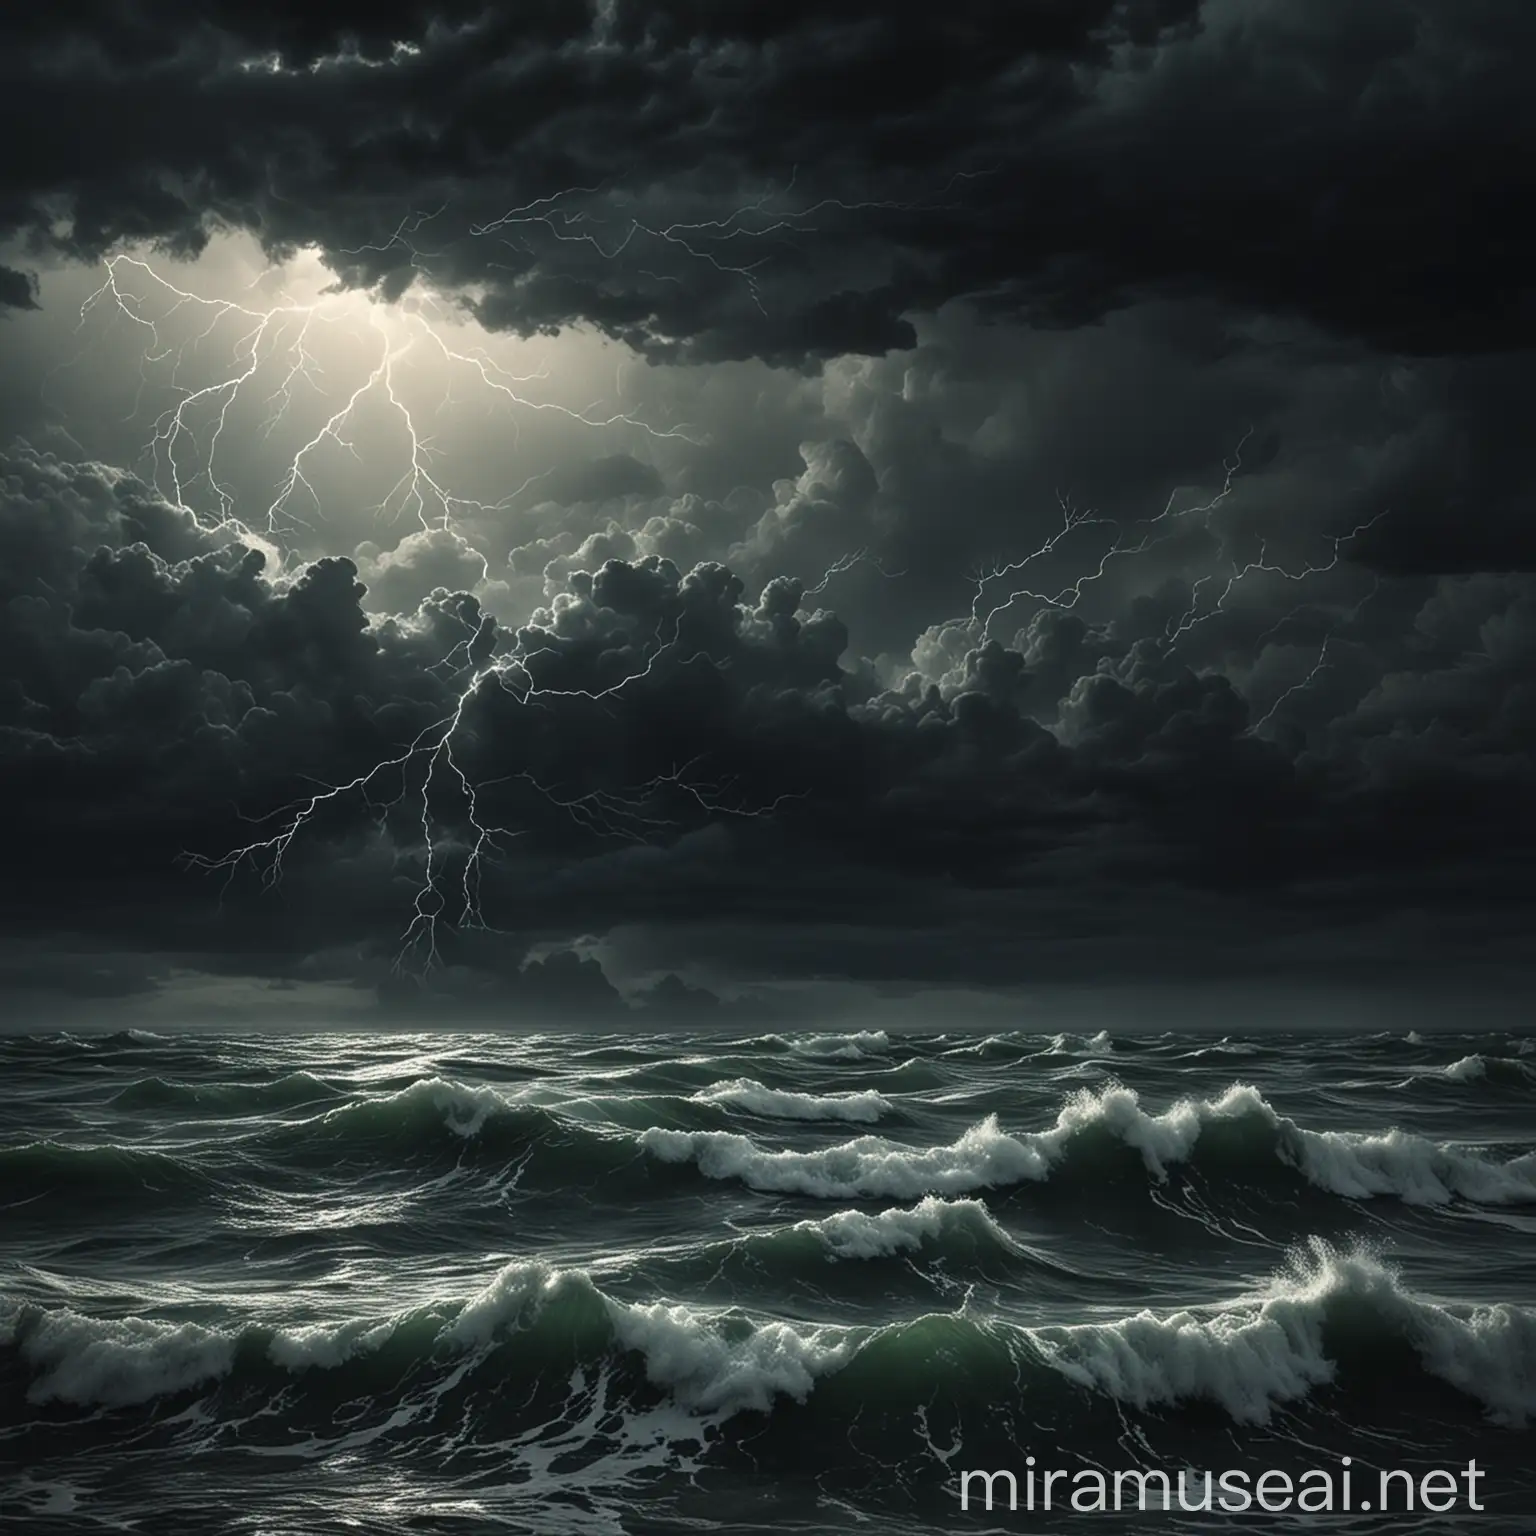 dark stormy sea with thunder